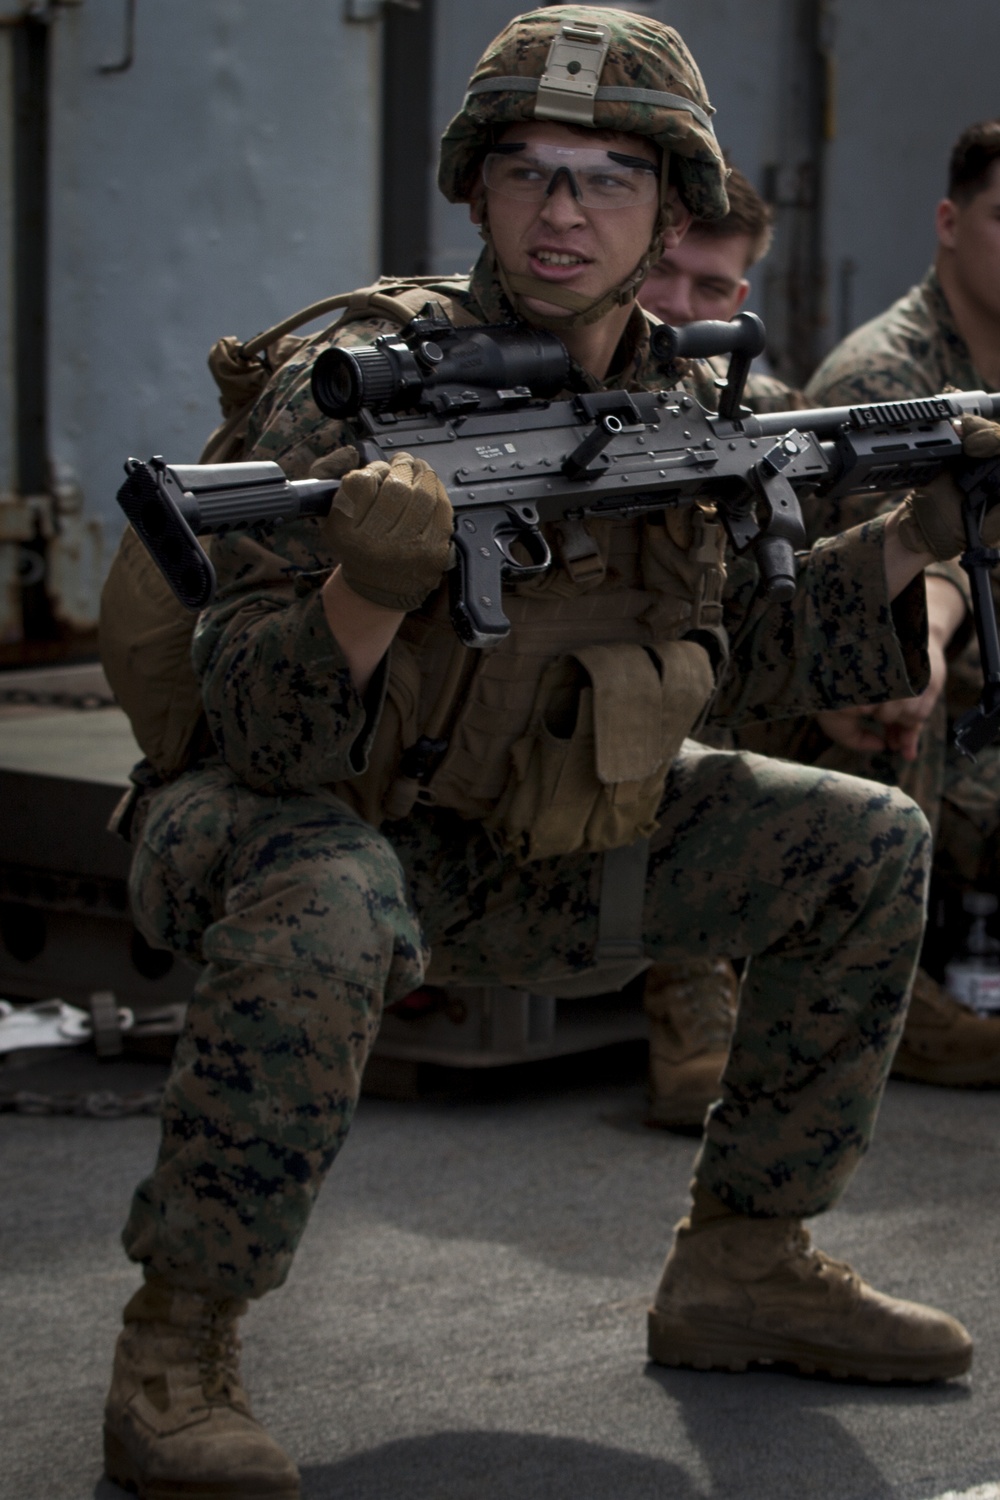 BLT Marines conduct combat conditioning marksmanship aboard BHR